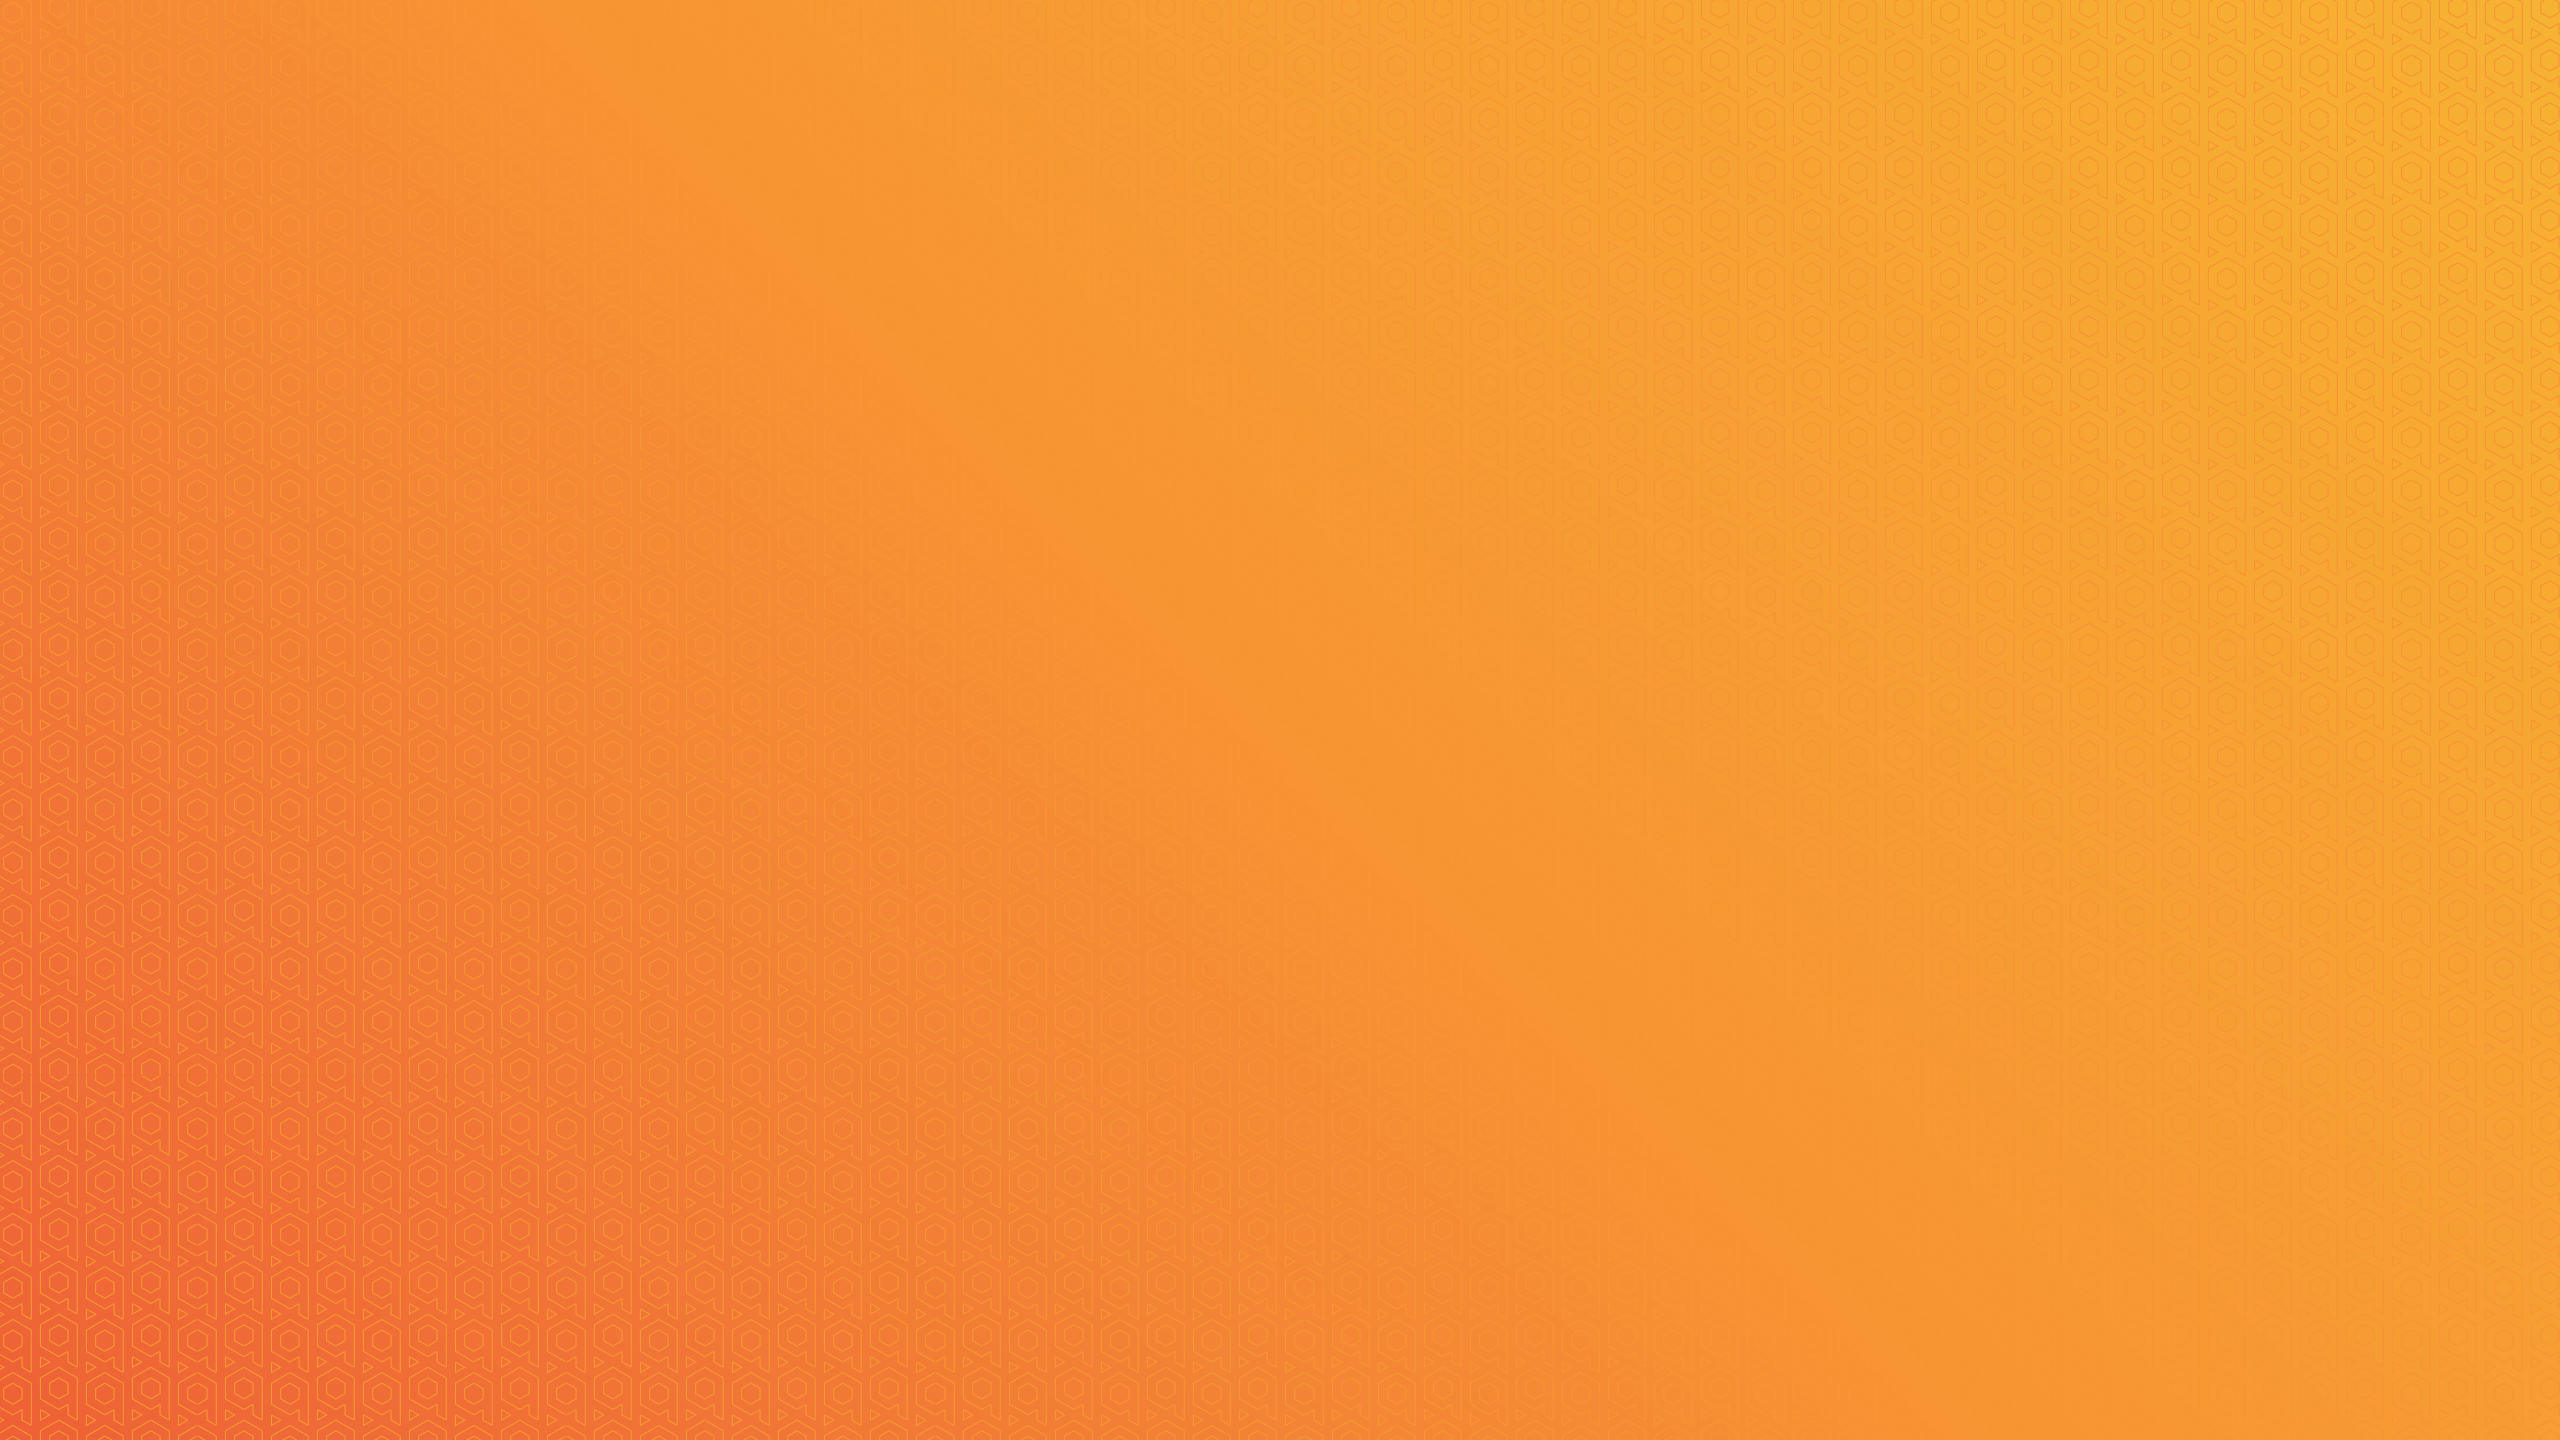 qalitas-orange-patterned-bkg